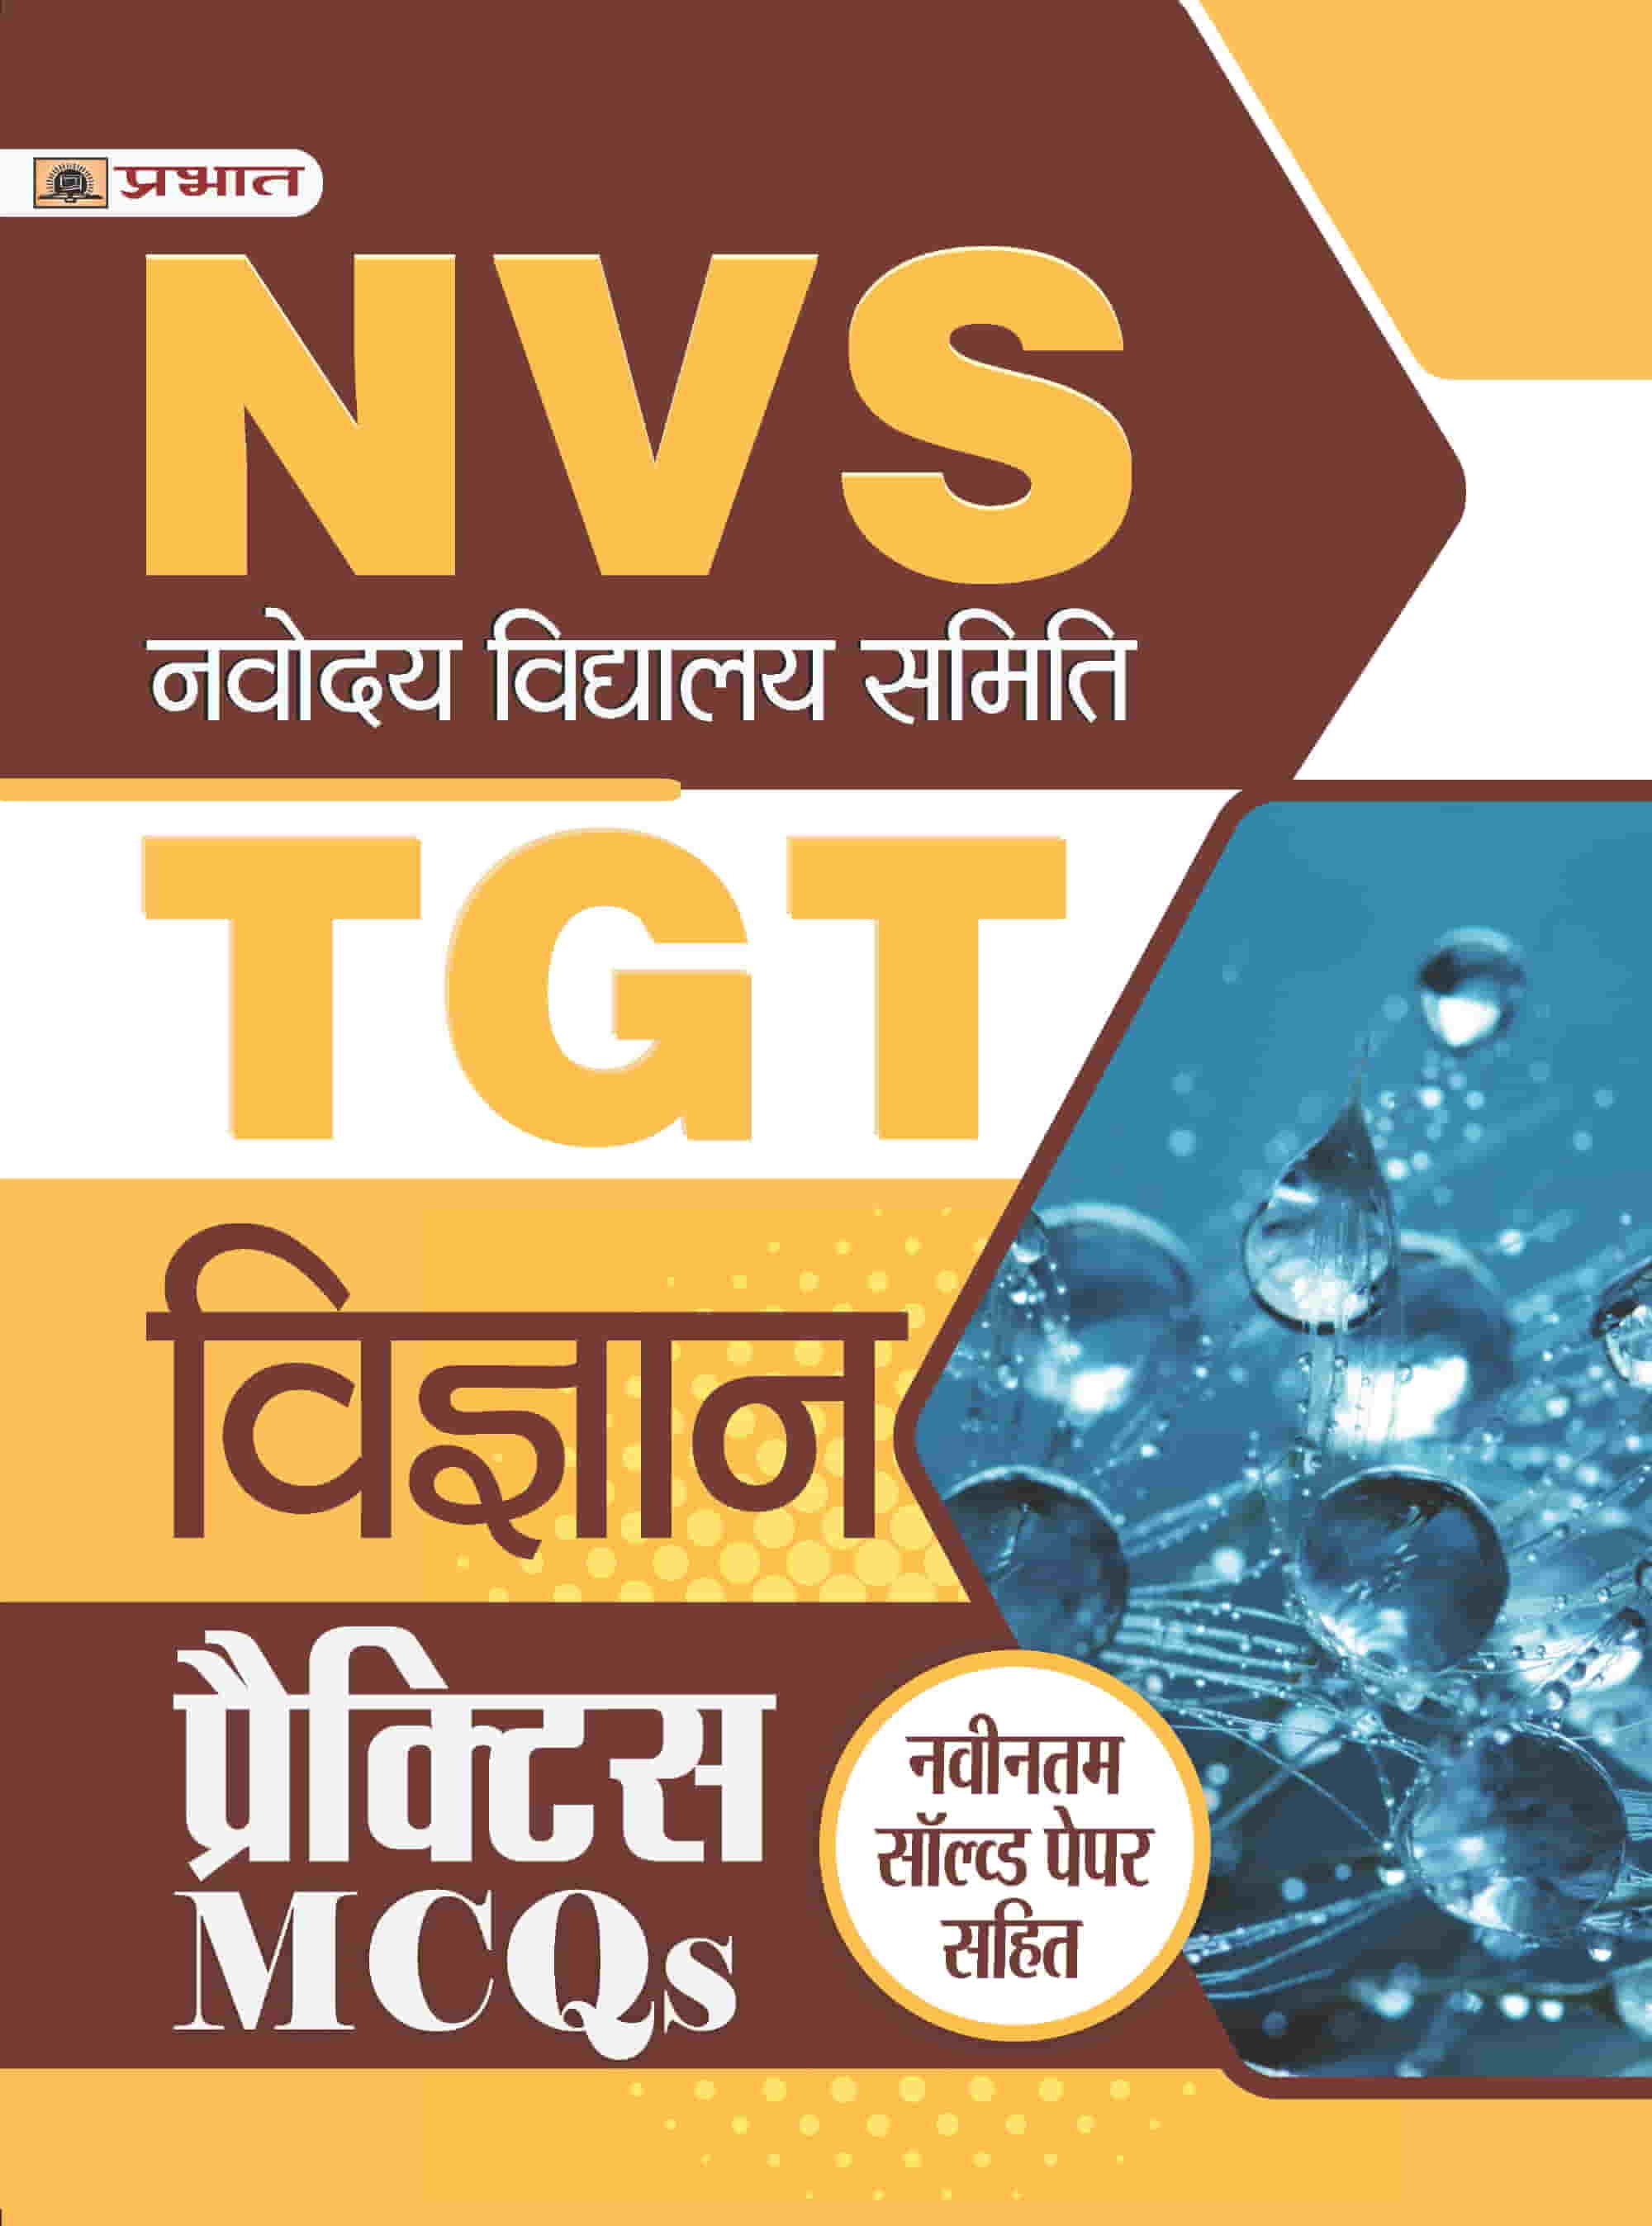 NVS Navodaya Vidyalaya Samiti TGT Vigyan (Science) Practice MCQs in Hindi